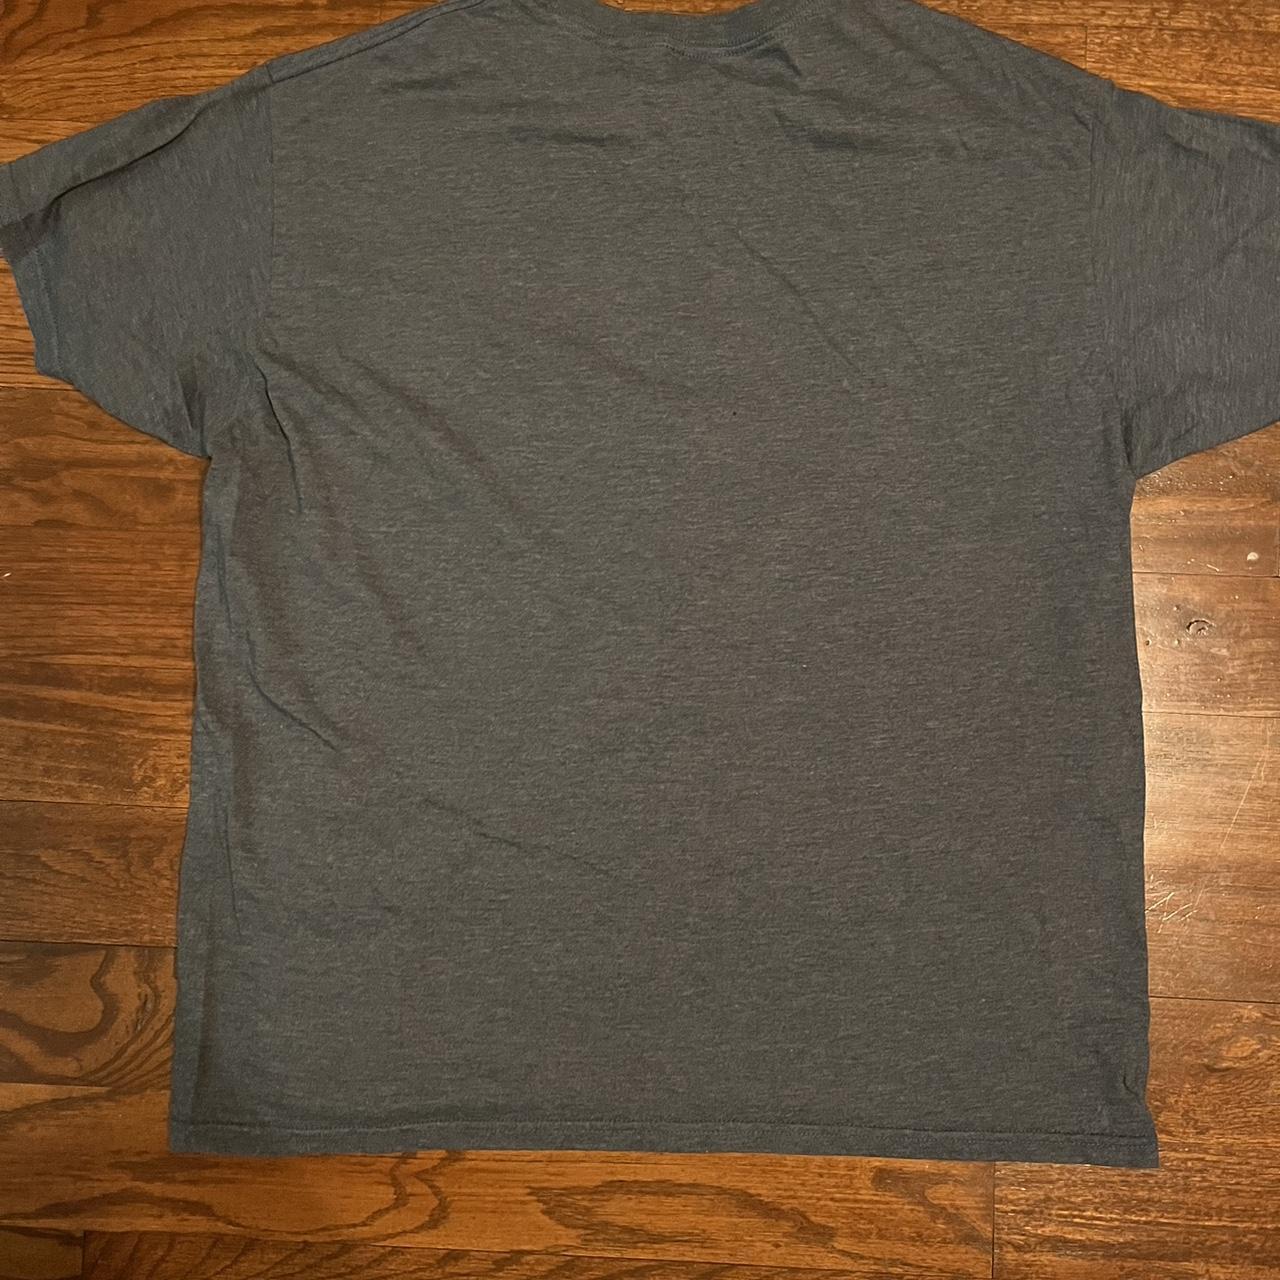 Huk Fishing T-shirt Size XL